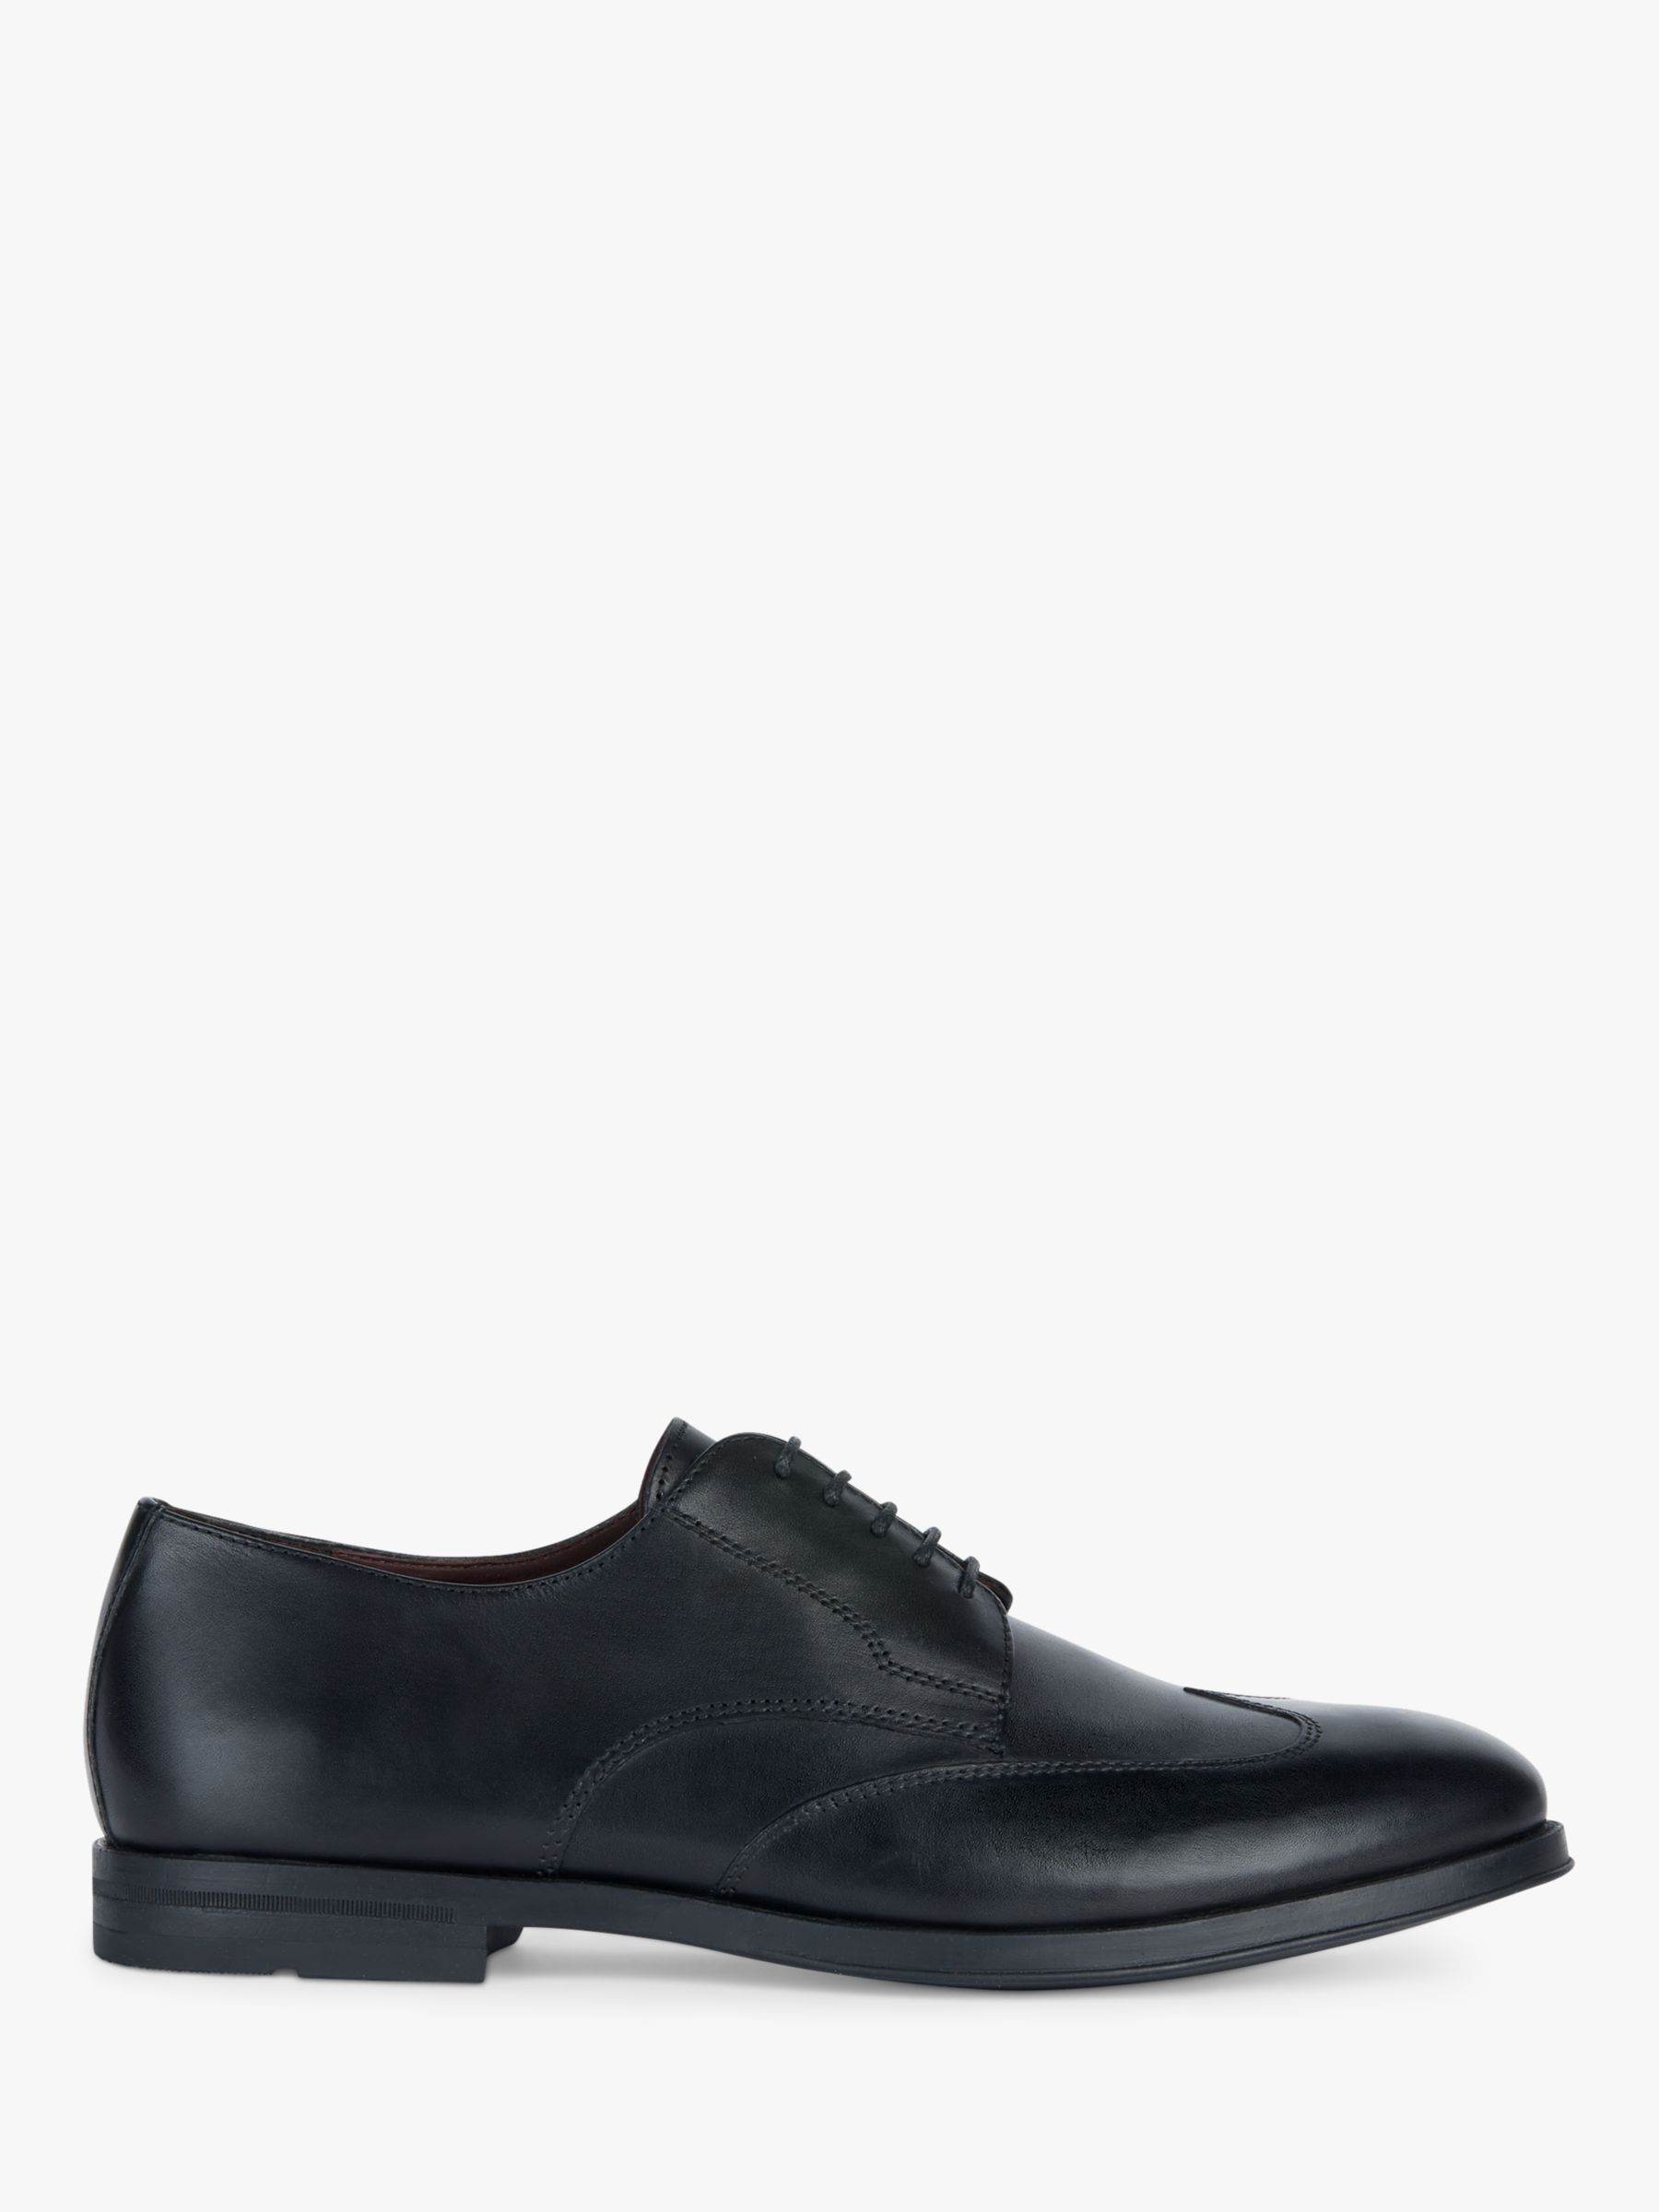 Geox Decio Oxford Shoes, Black at John Lewis & Partners